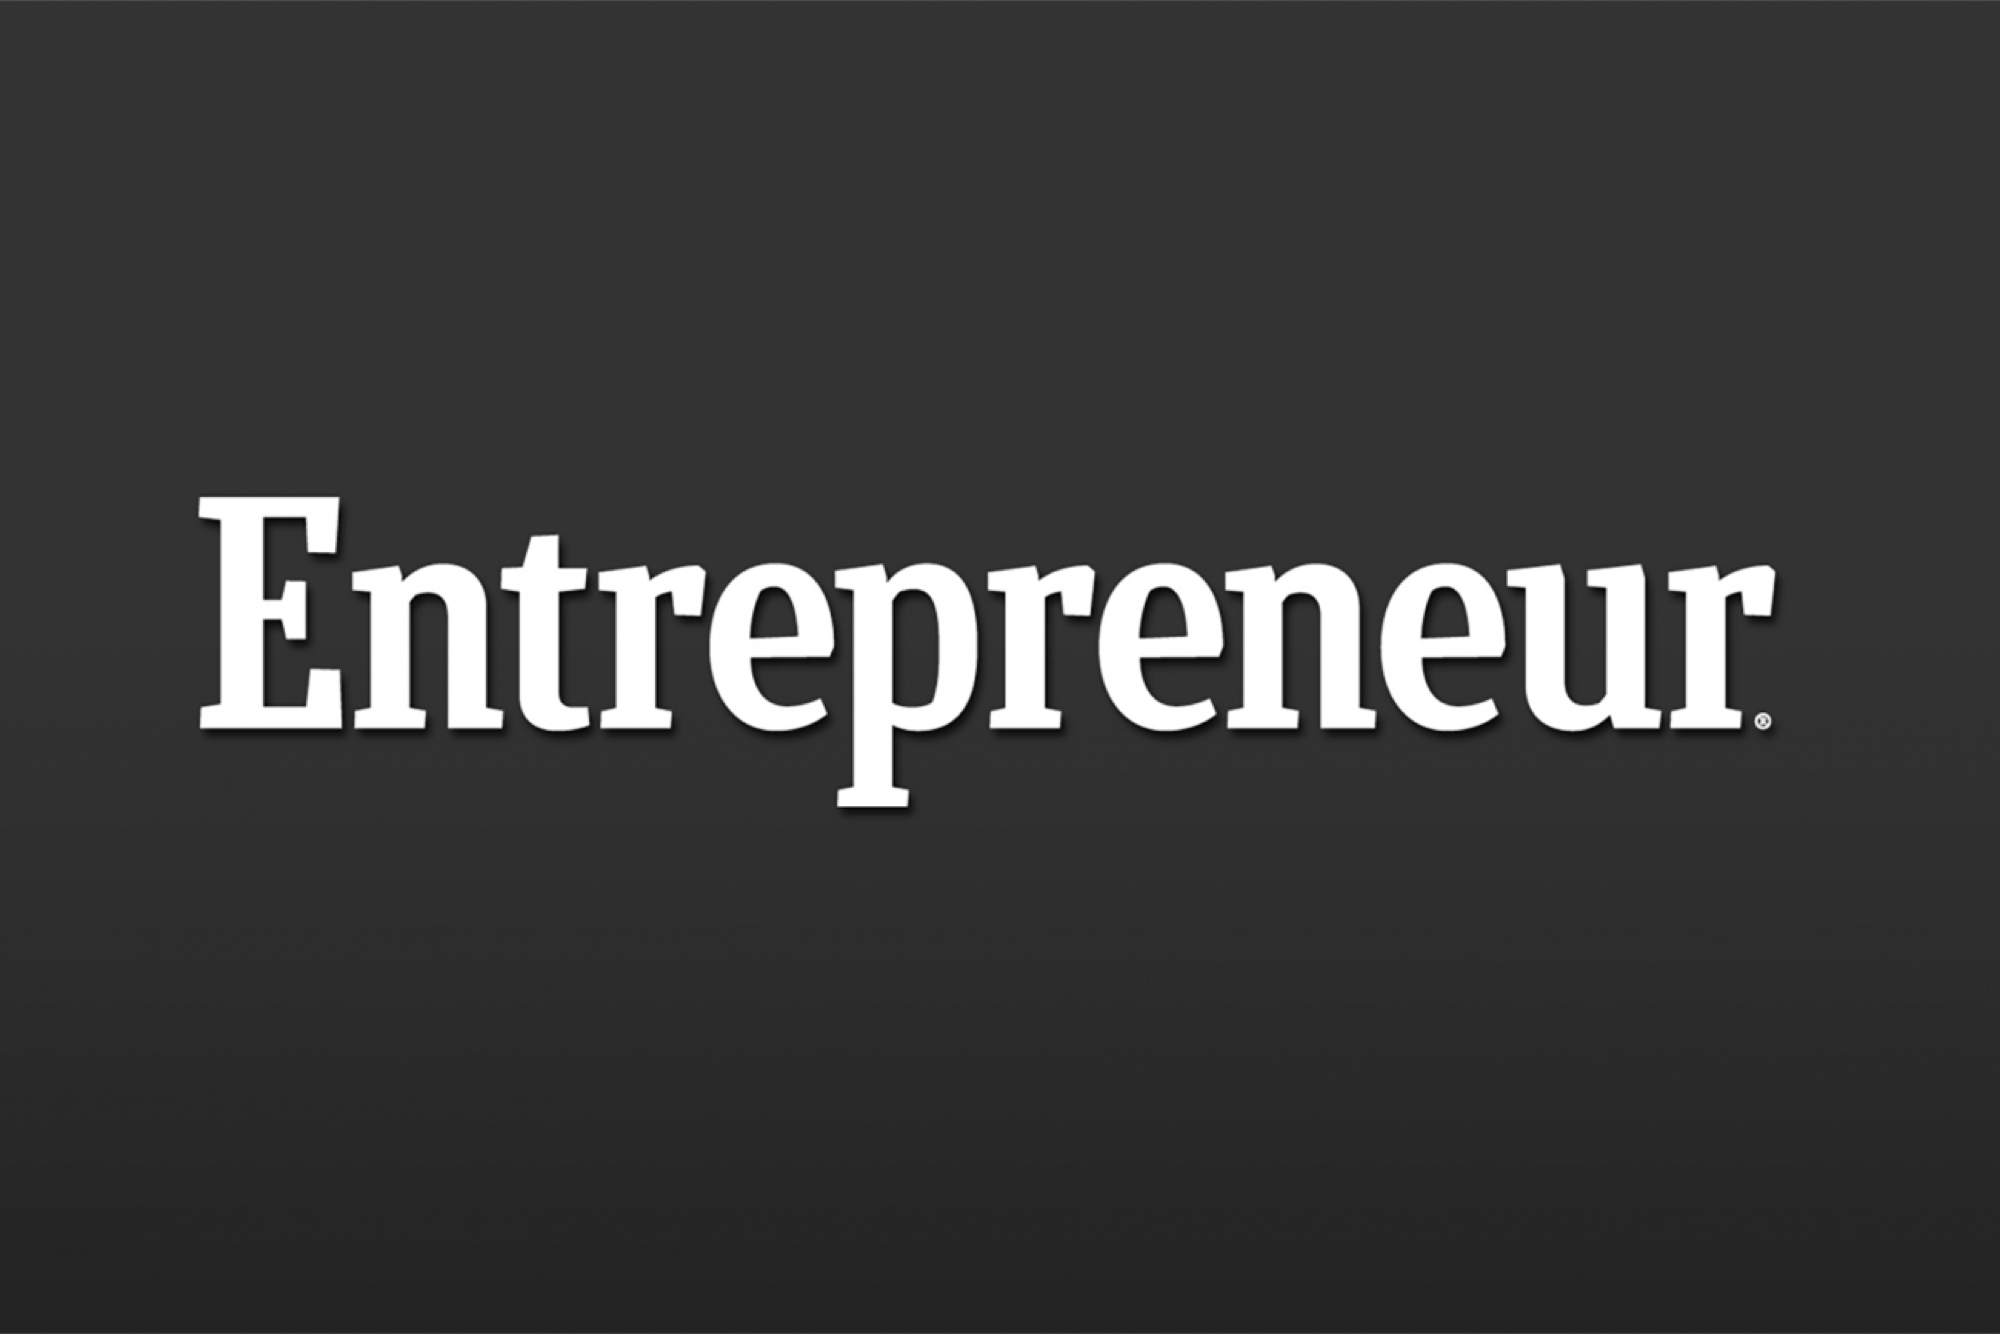 Entrepreneur Logo - Entrepreneur - Start, run and grow your business.